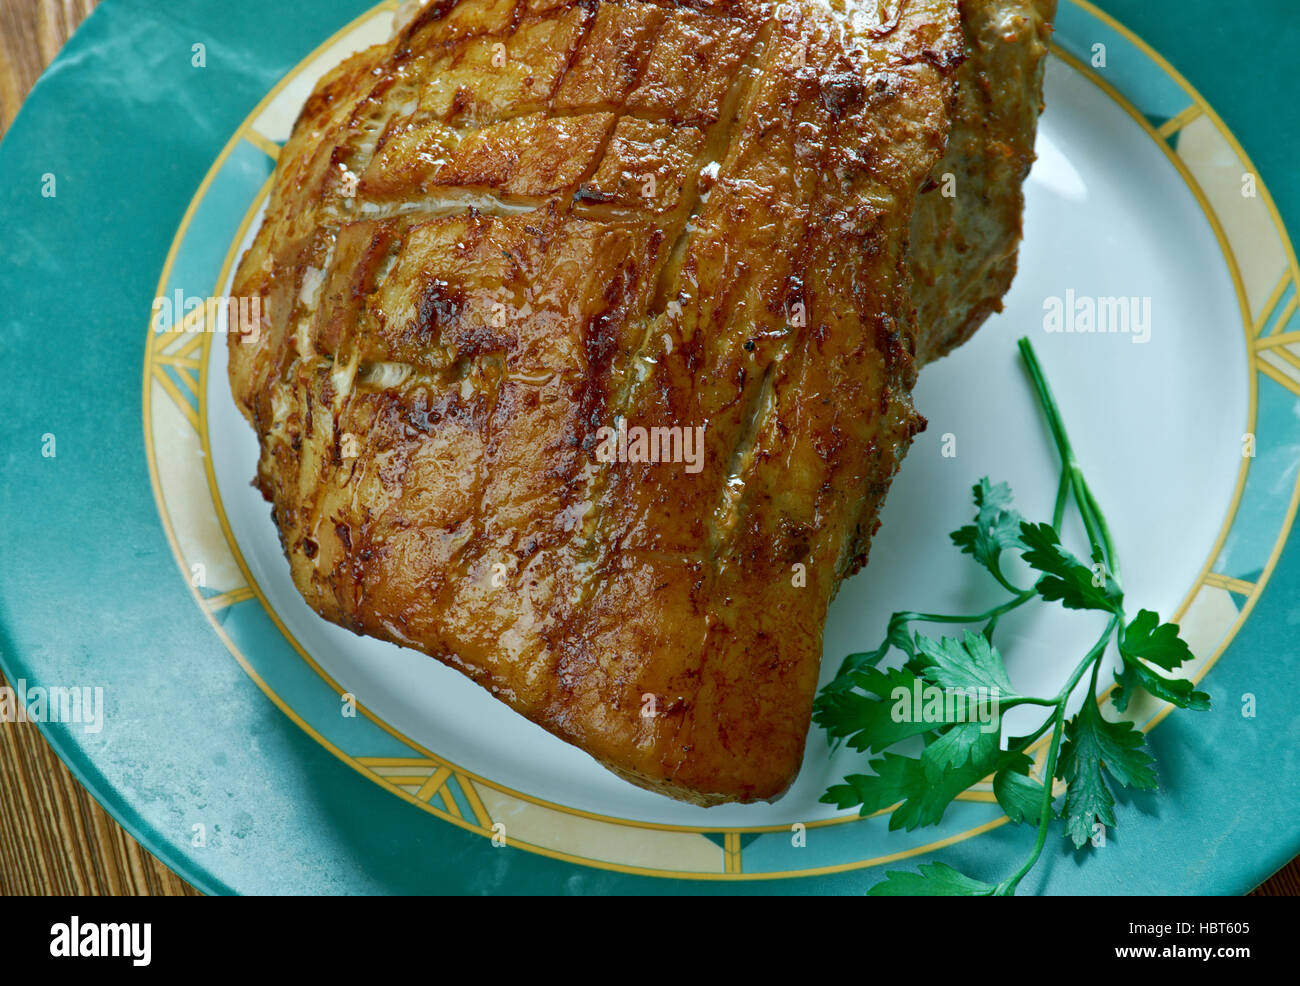 Flaeskesteg Danish Roast Pork with Crackling for Christmas.Danish cuisine Stock Photo